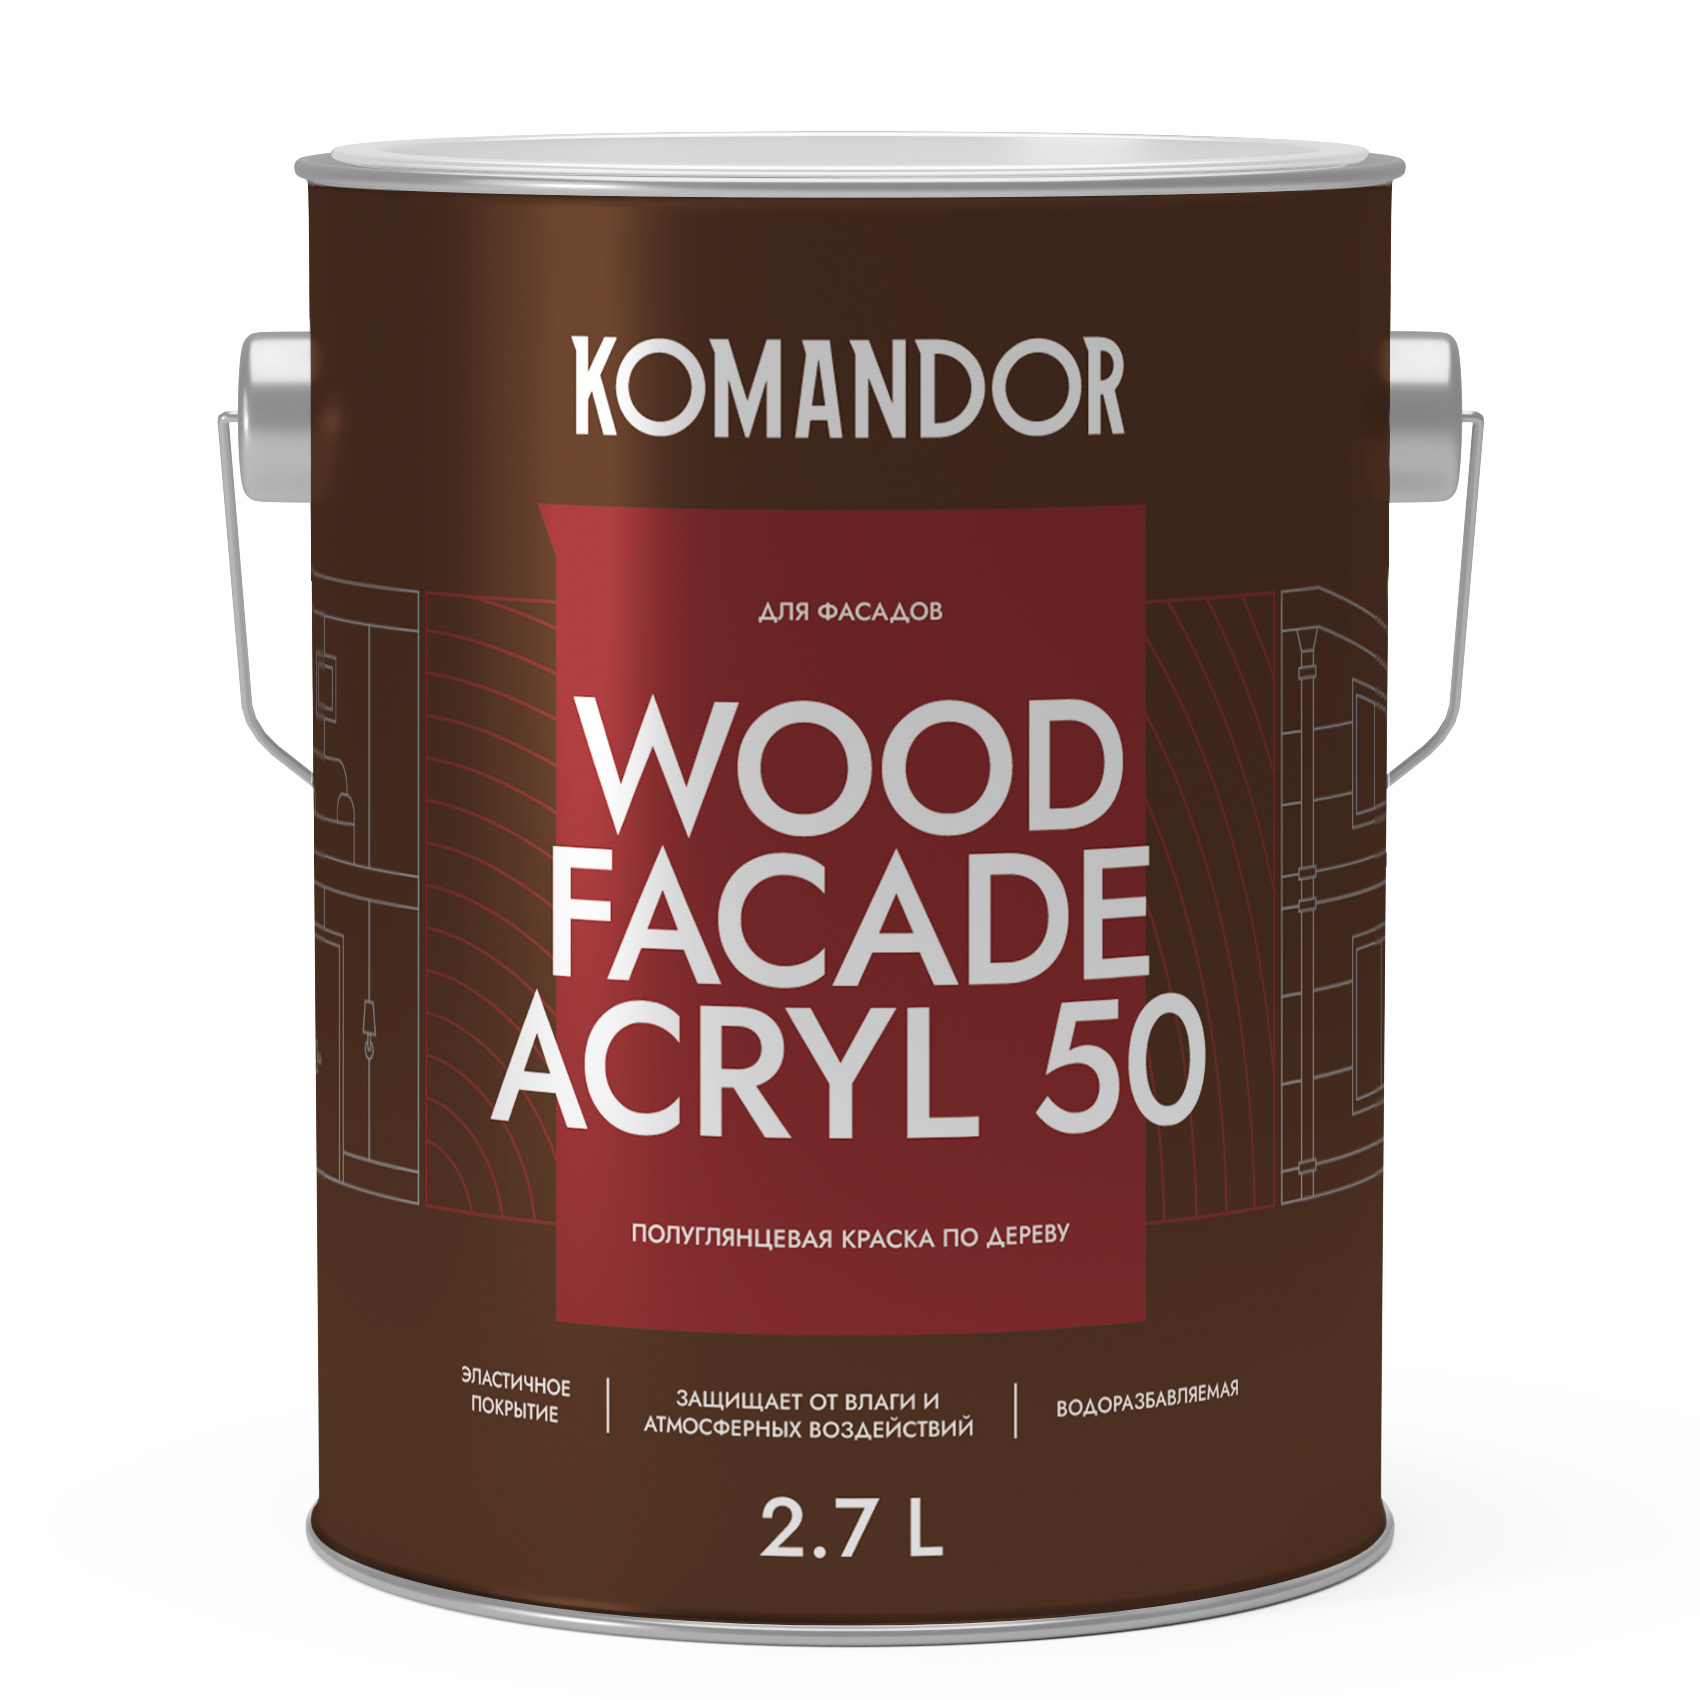 Краска для деревянных фасадов Komandor Wood Facade Akryl 50 A S1321001003 полуглянцевая 2,7 л - фото 1